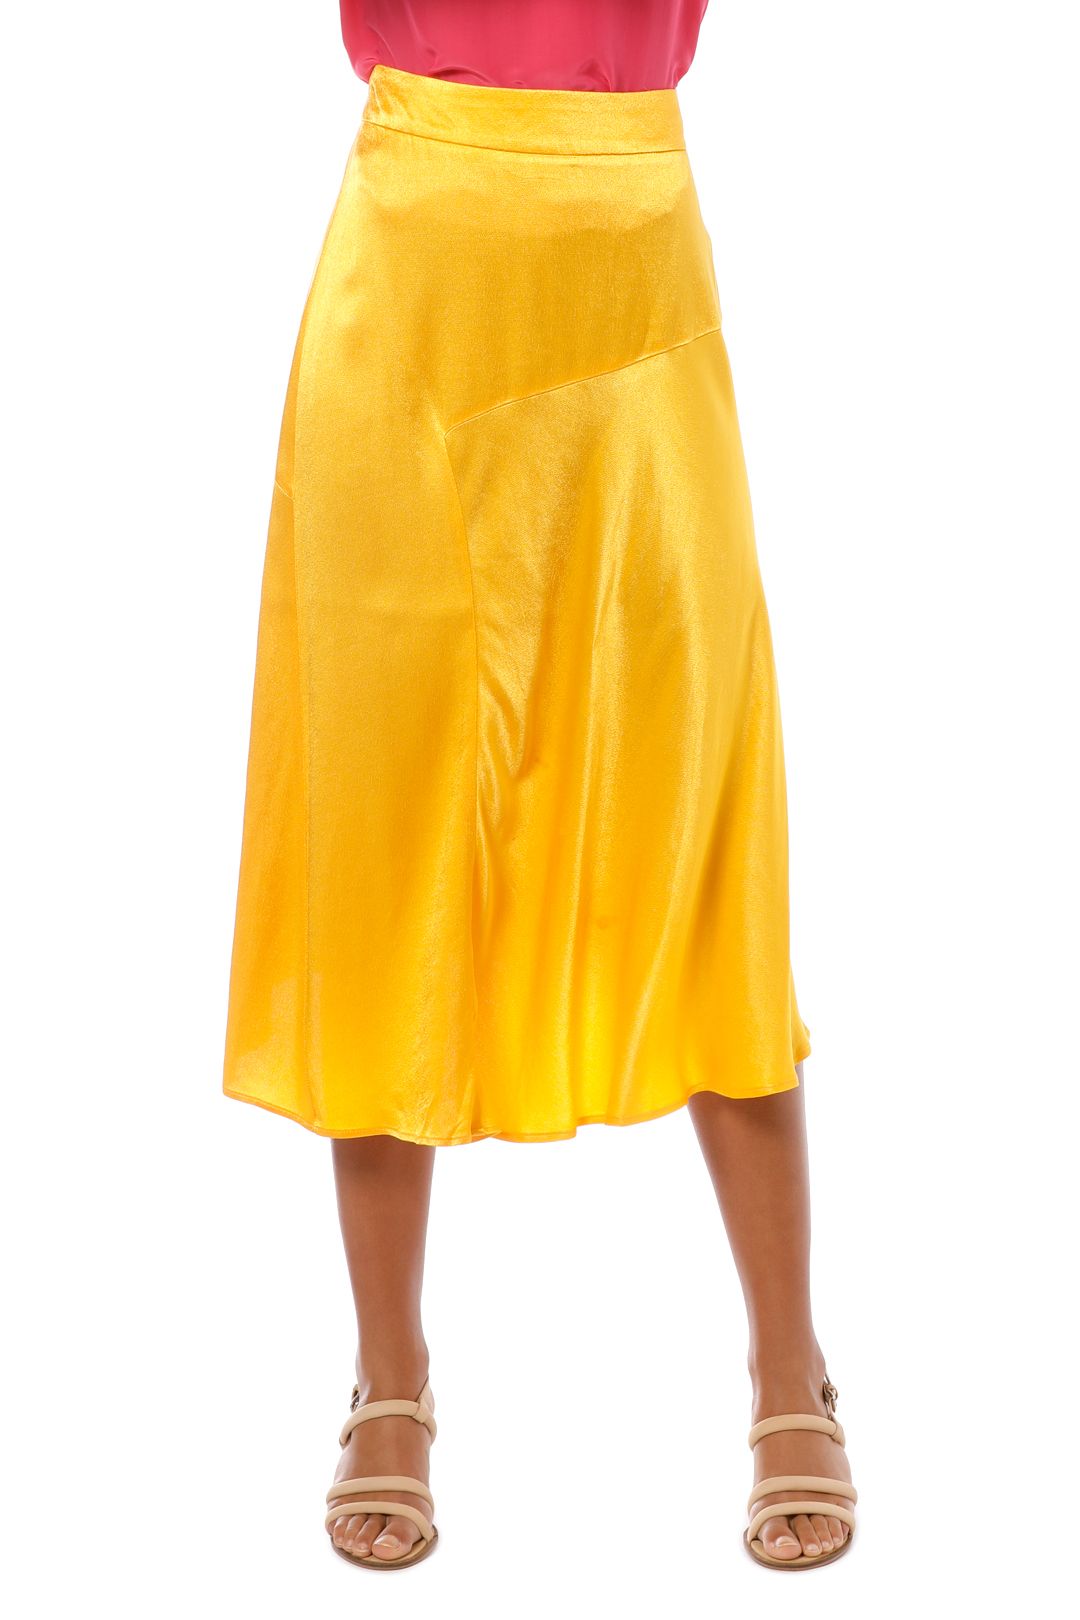 Vestire - Kaia Skirt - Yellow - Front Crop